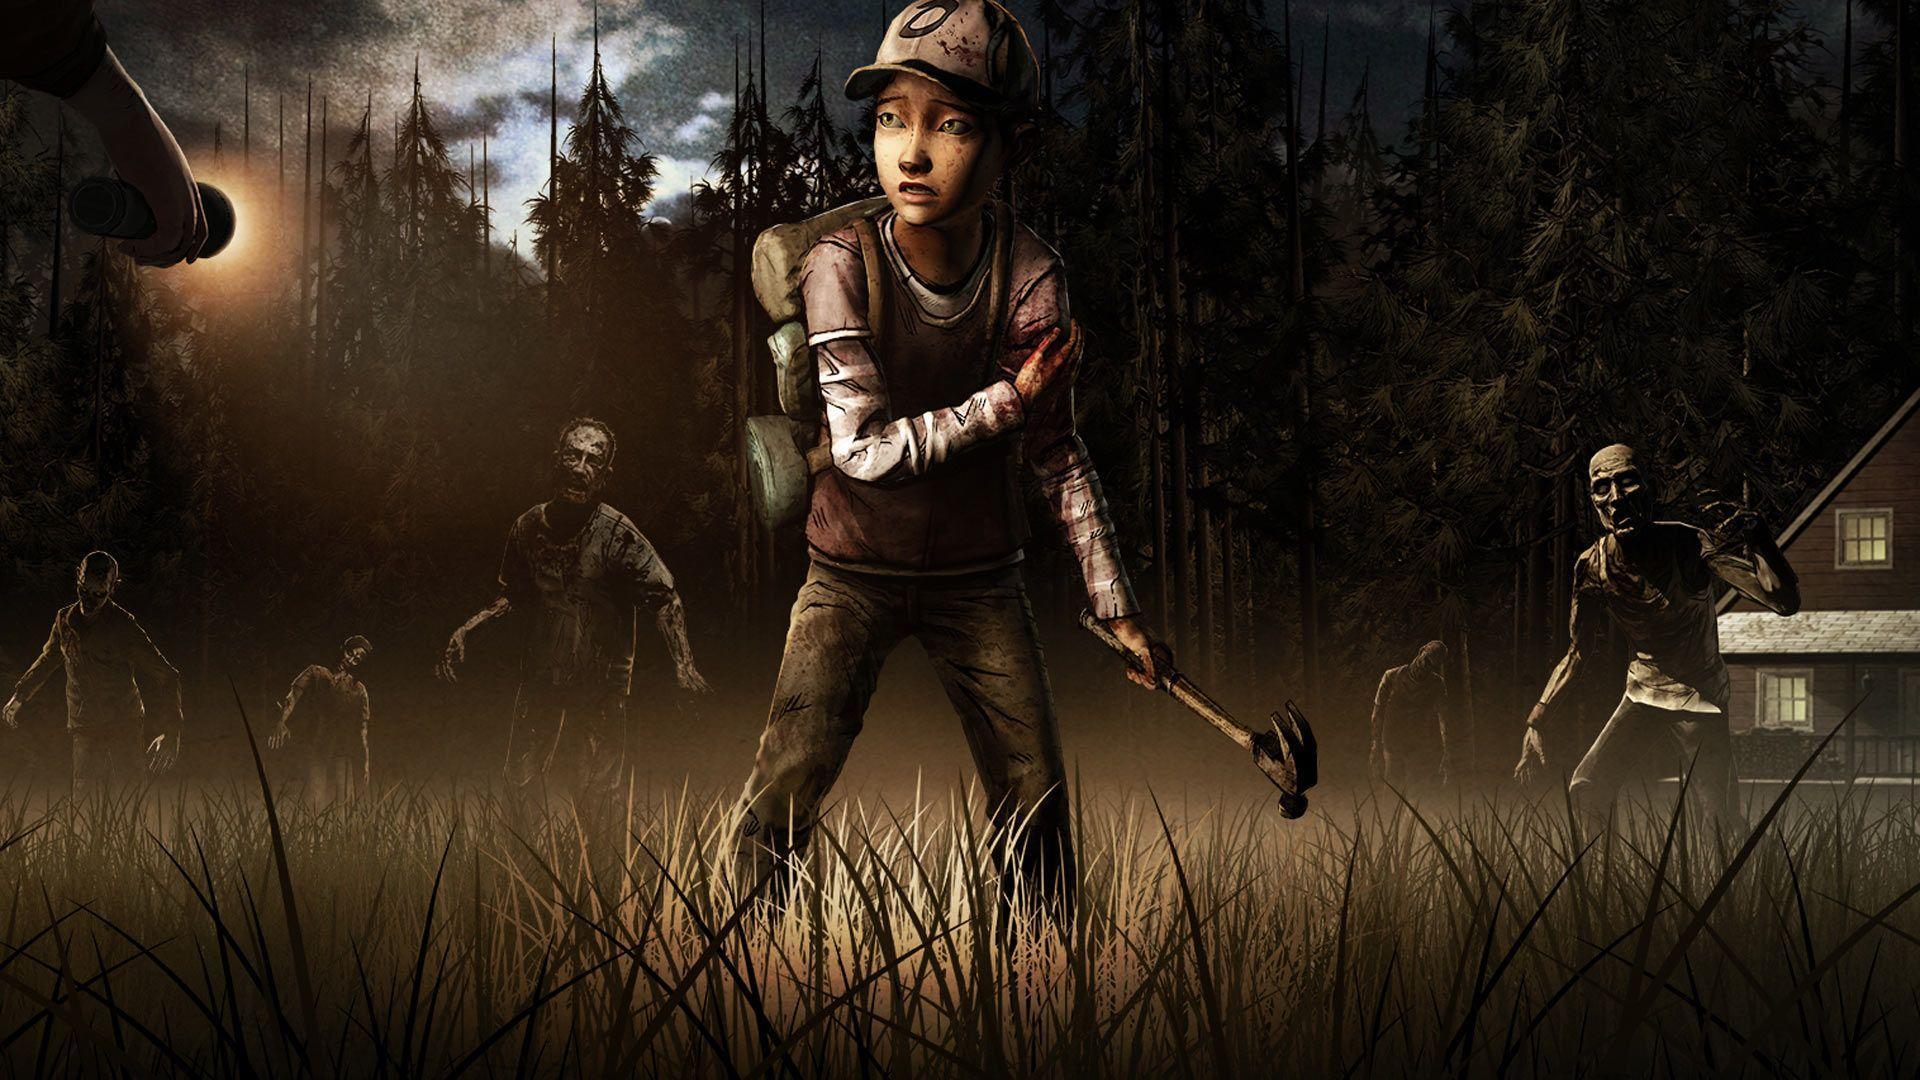 image For > The Walking Dead Season 2 Game Wallpaper